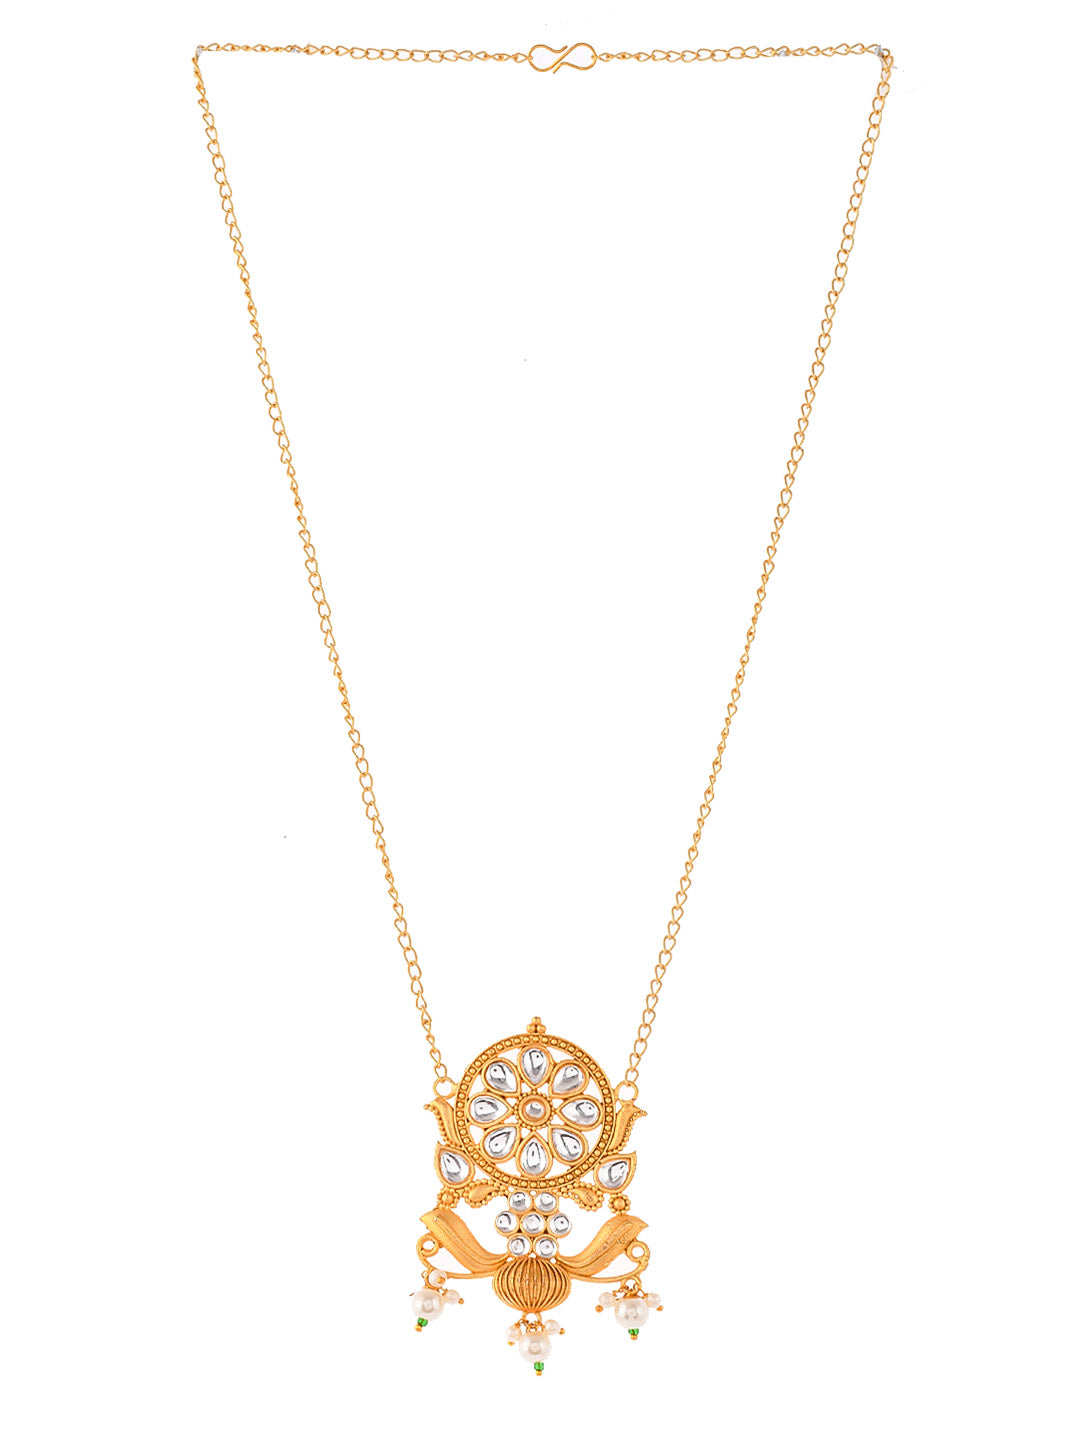 Ethnic Kundan Handcrafted Pendant Chain Necklace